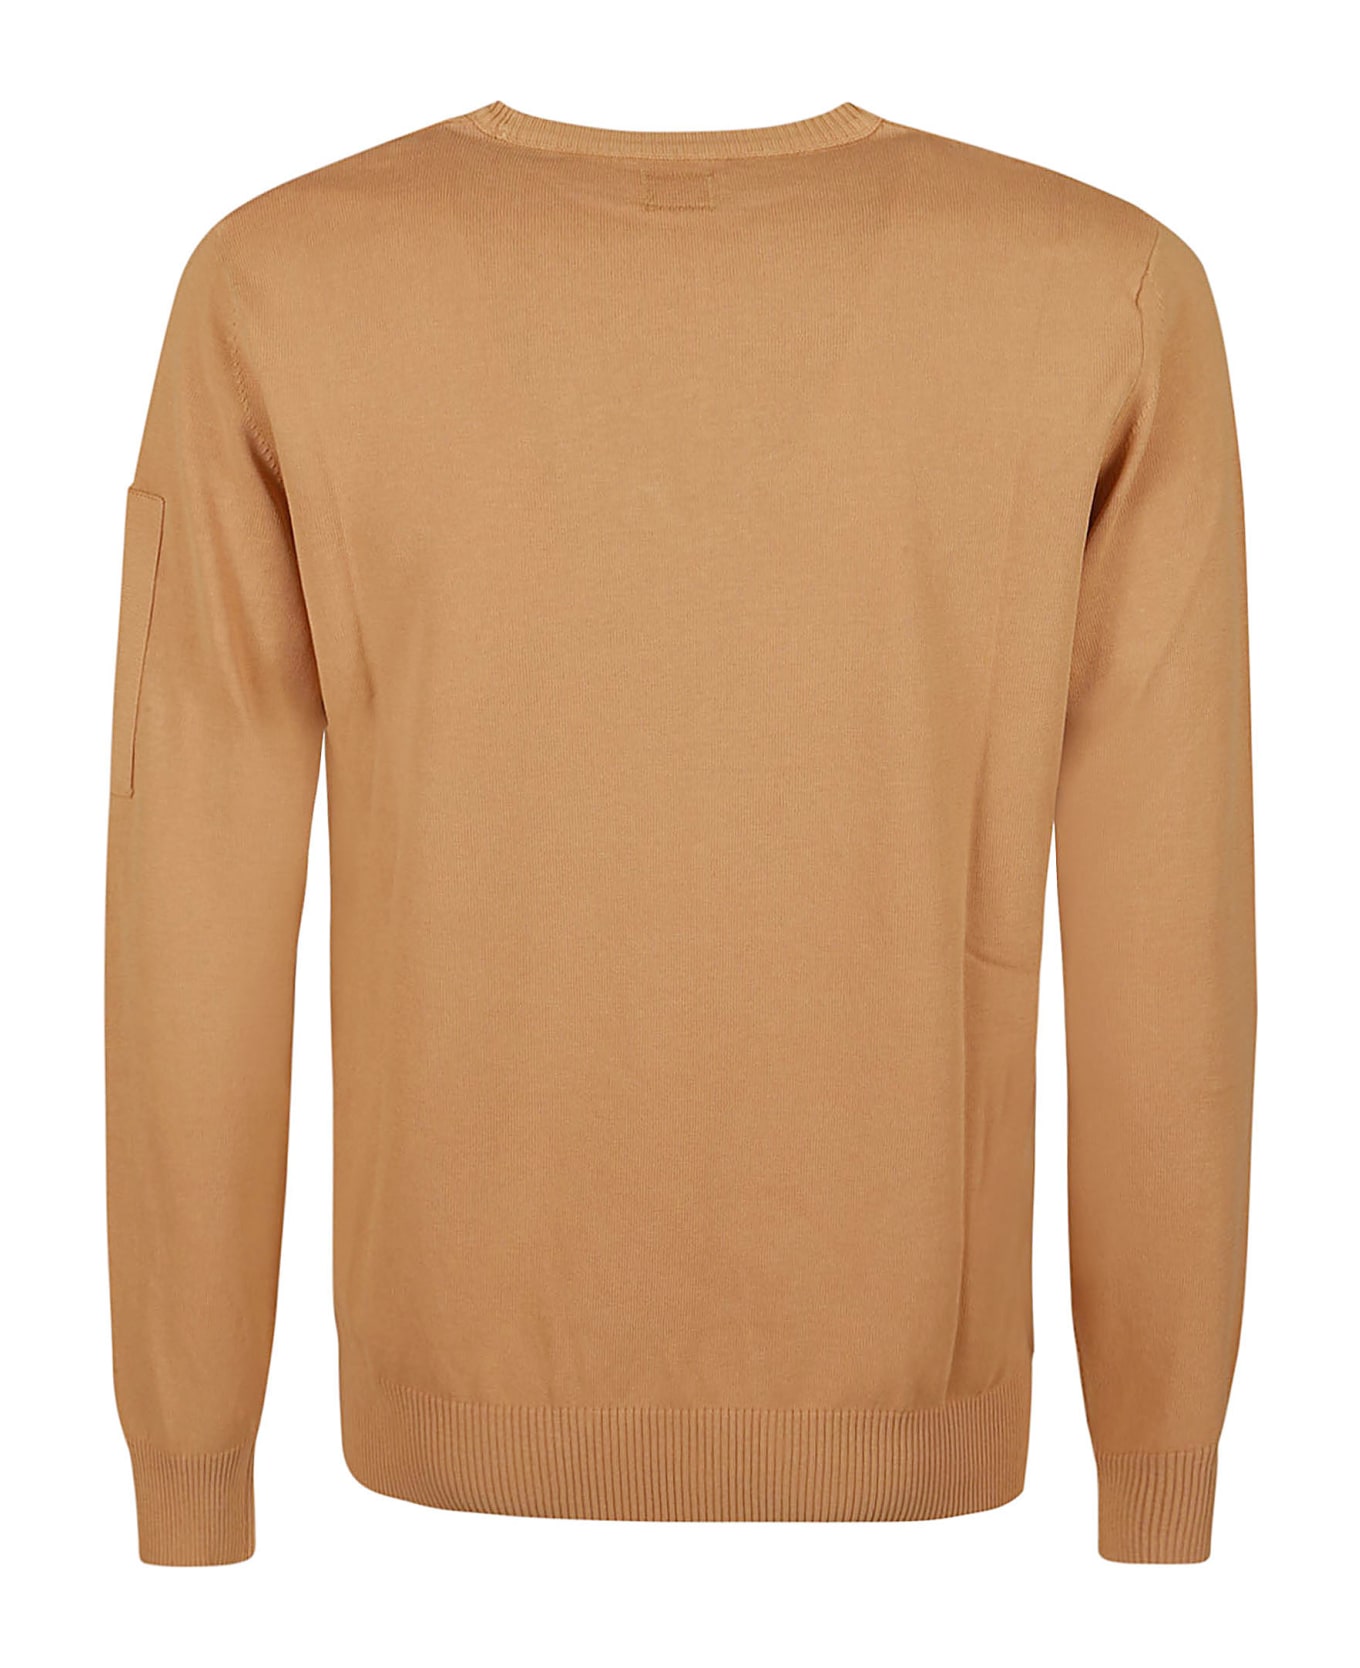 C.P. Company Old Dyed Crepe Sweatshirt - PASTRY SHELL ニットウェア